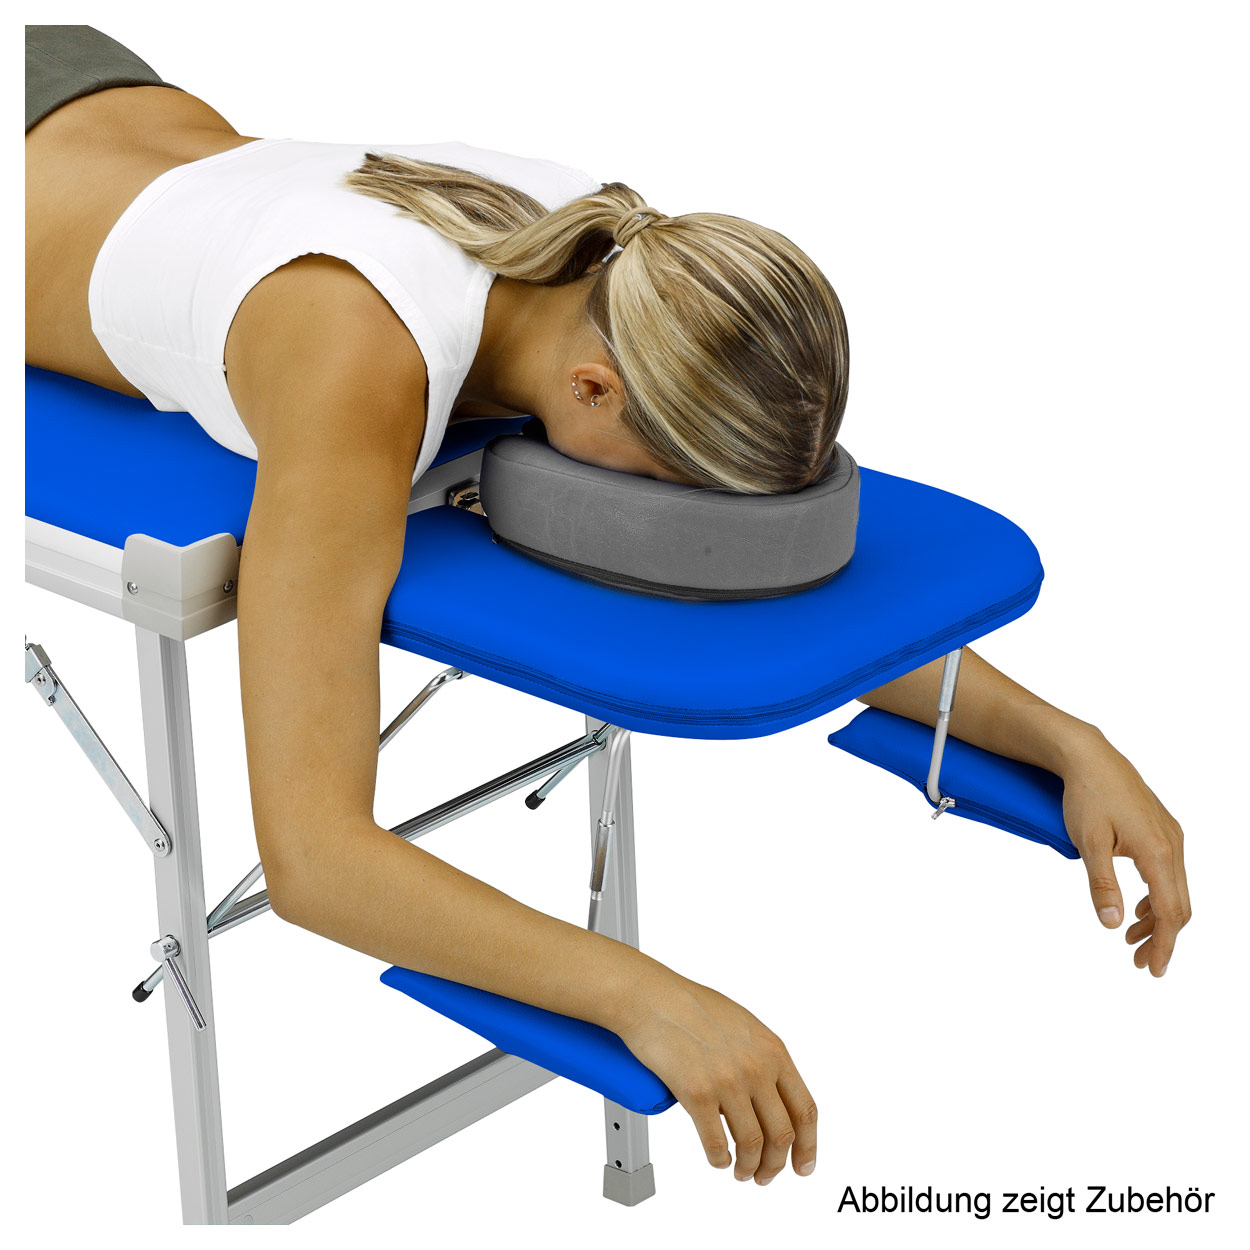 Portable Massage Table Robusta St Incl Head Rest Arm Rest 170